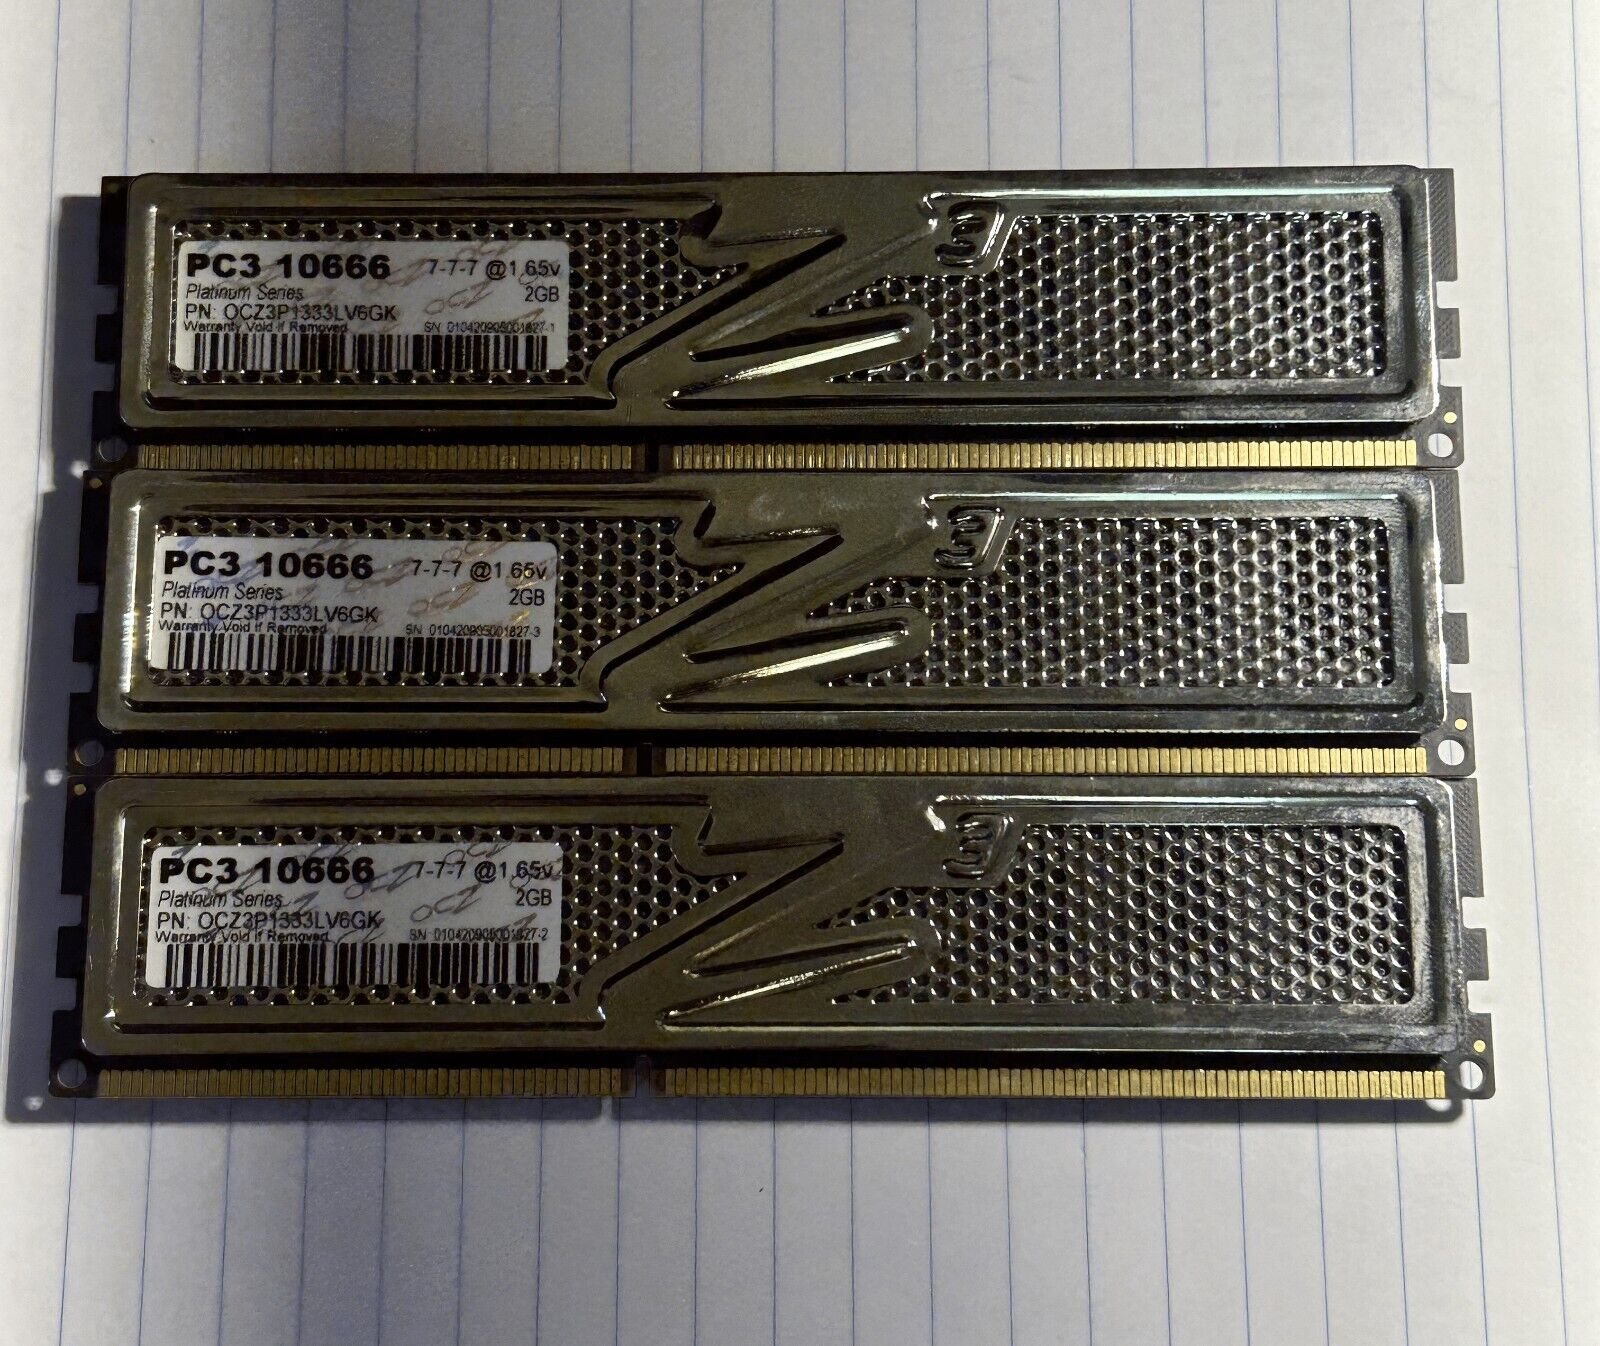 OCZ Technology 3x 2GB DIMM 1333 MHz DDR3 SDRAM Memory OCZ3P 333LV6GK Gold Series